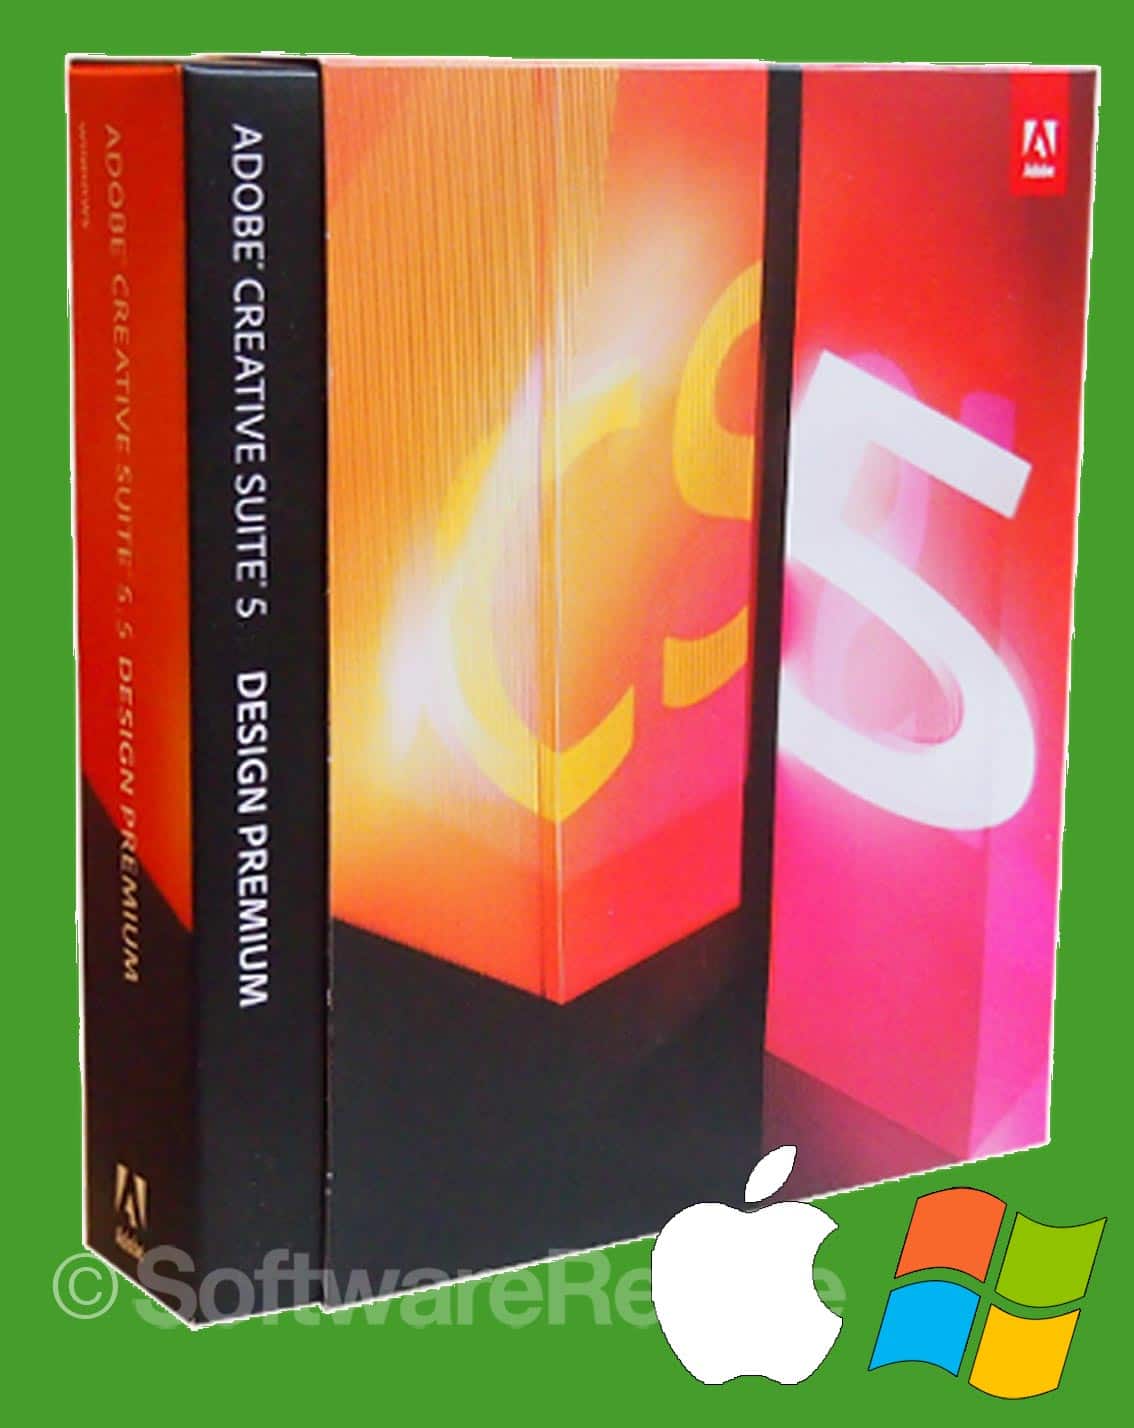 Adobe Creative Suite 5 Design Premium Windows MacintoshDBa0TTzA2aW7t